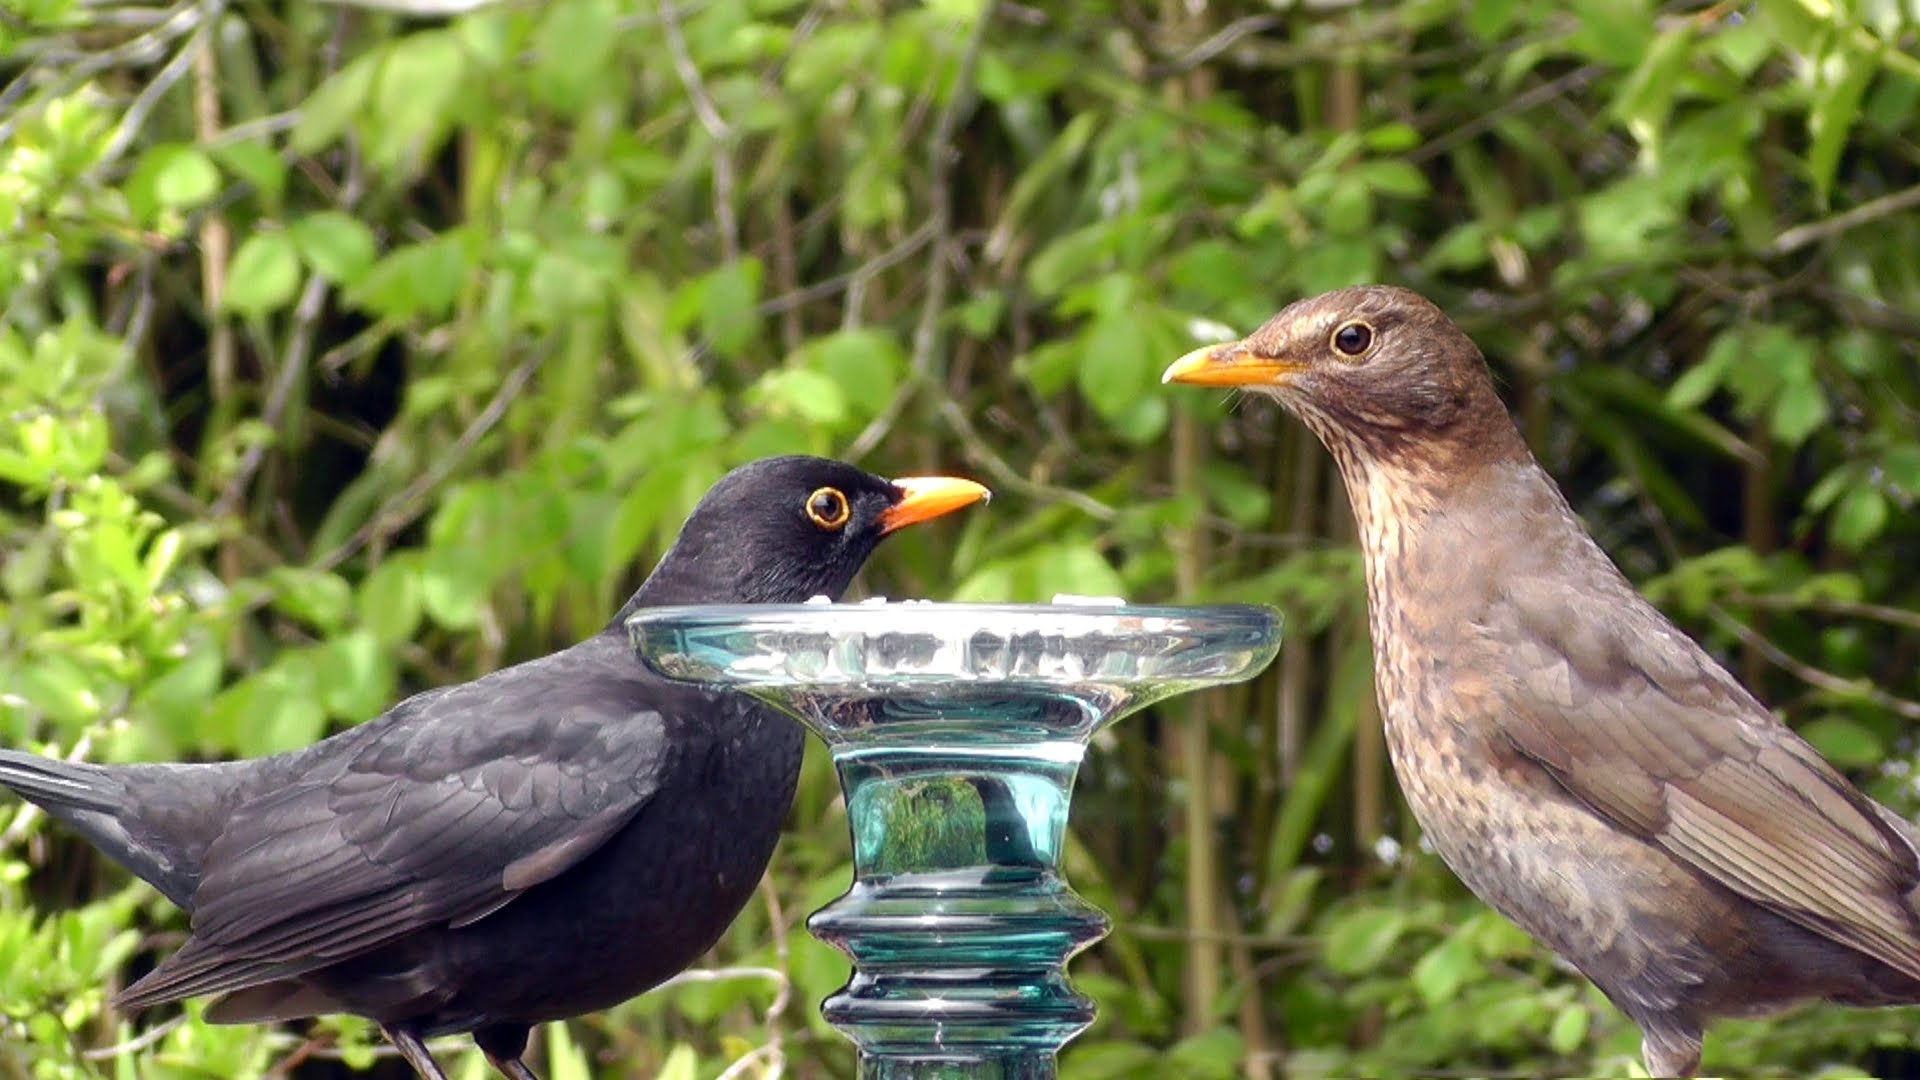 Male and Female Blackbird - Birds on Display - YouTube